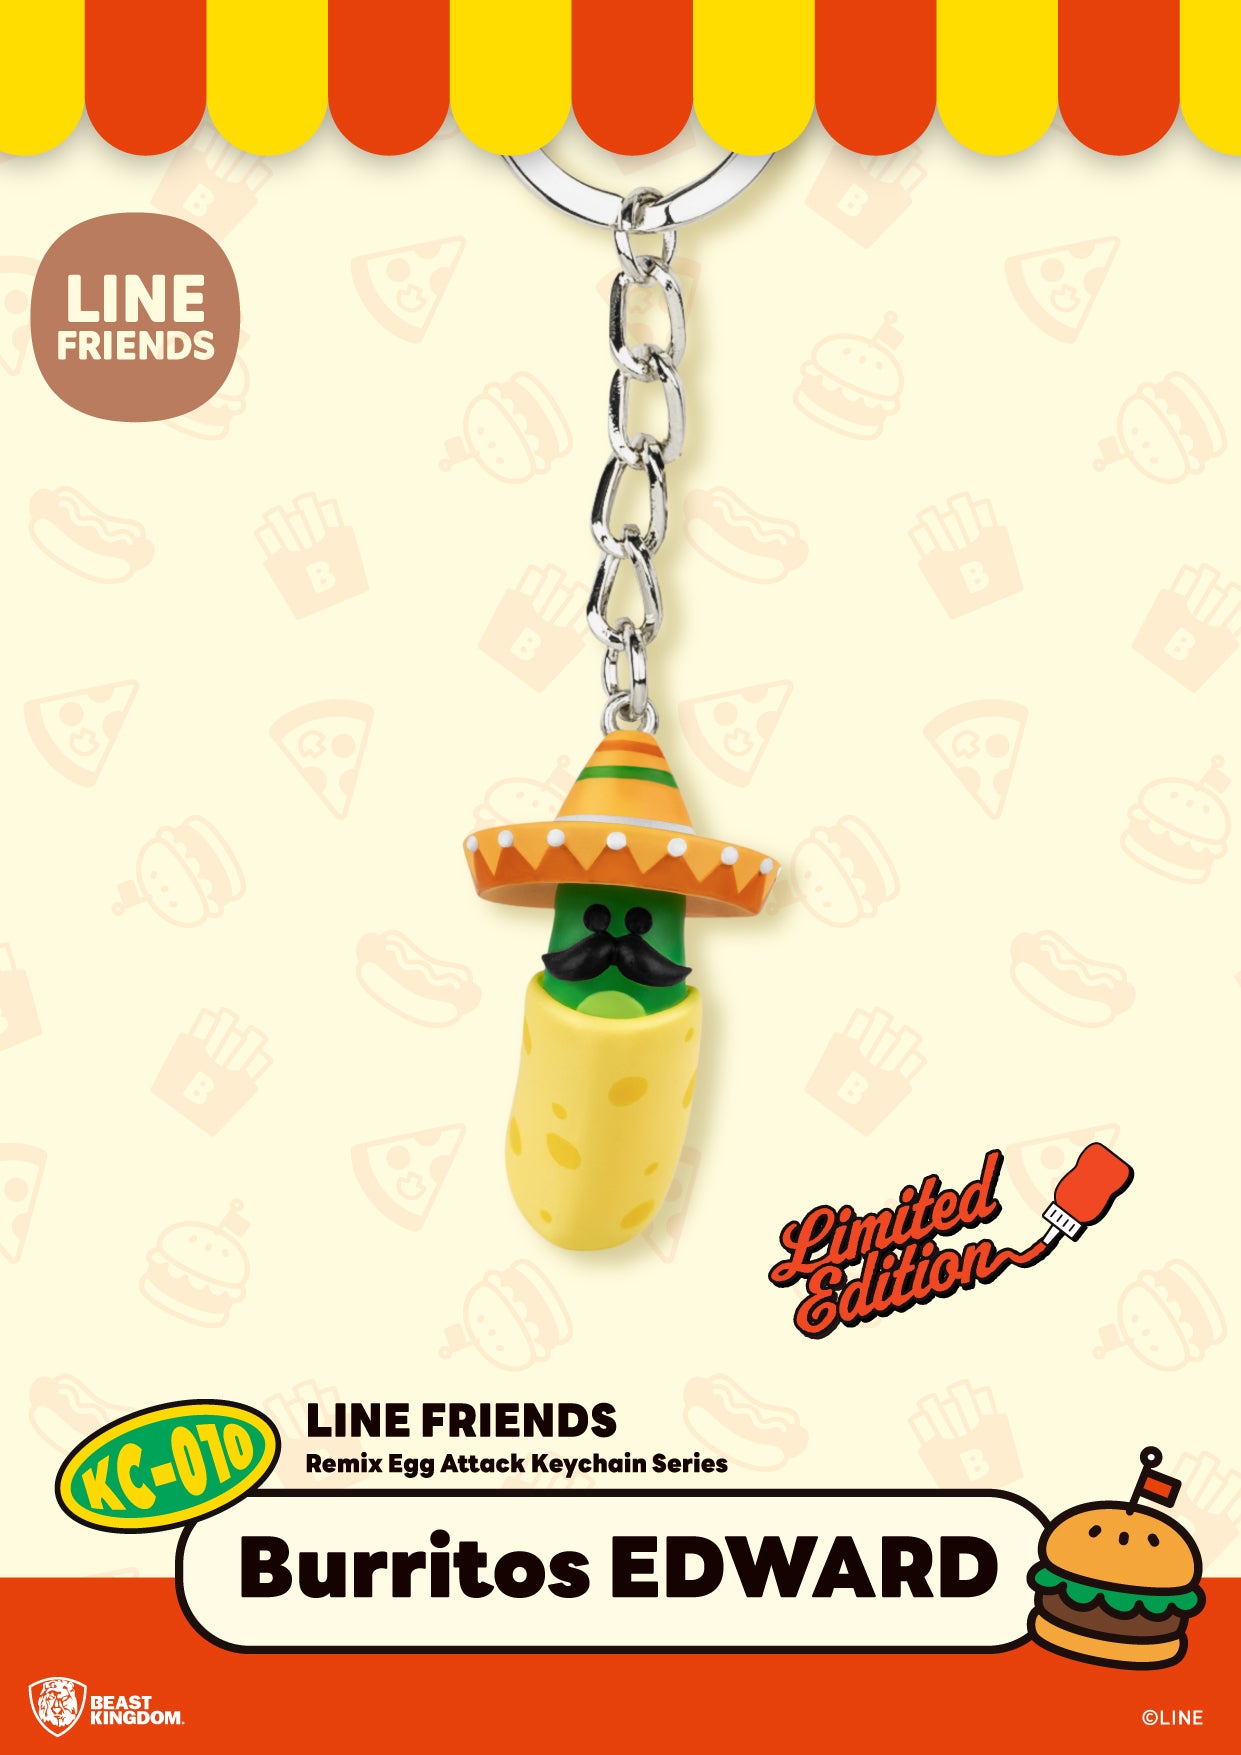 LINE FRIENDS Remix Egg Attack Keychain Series by Beast Kingdom